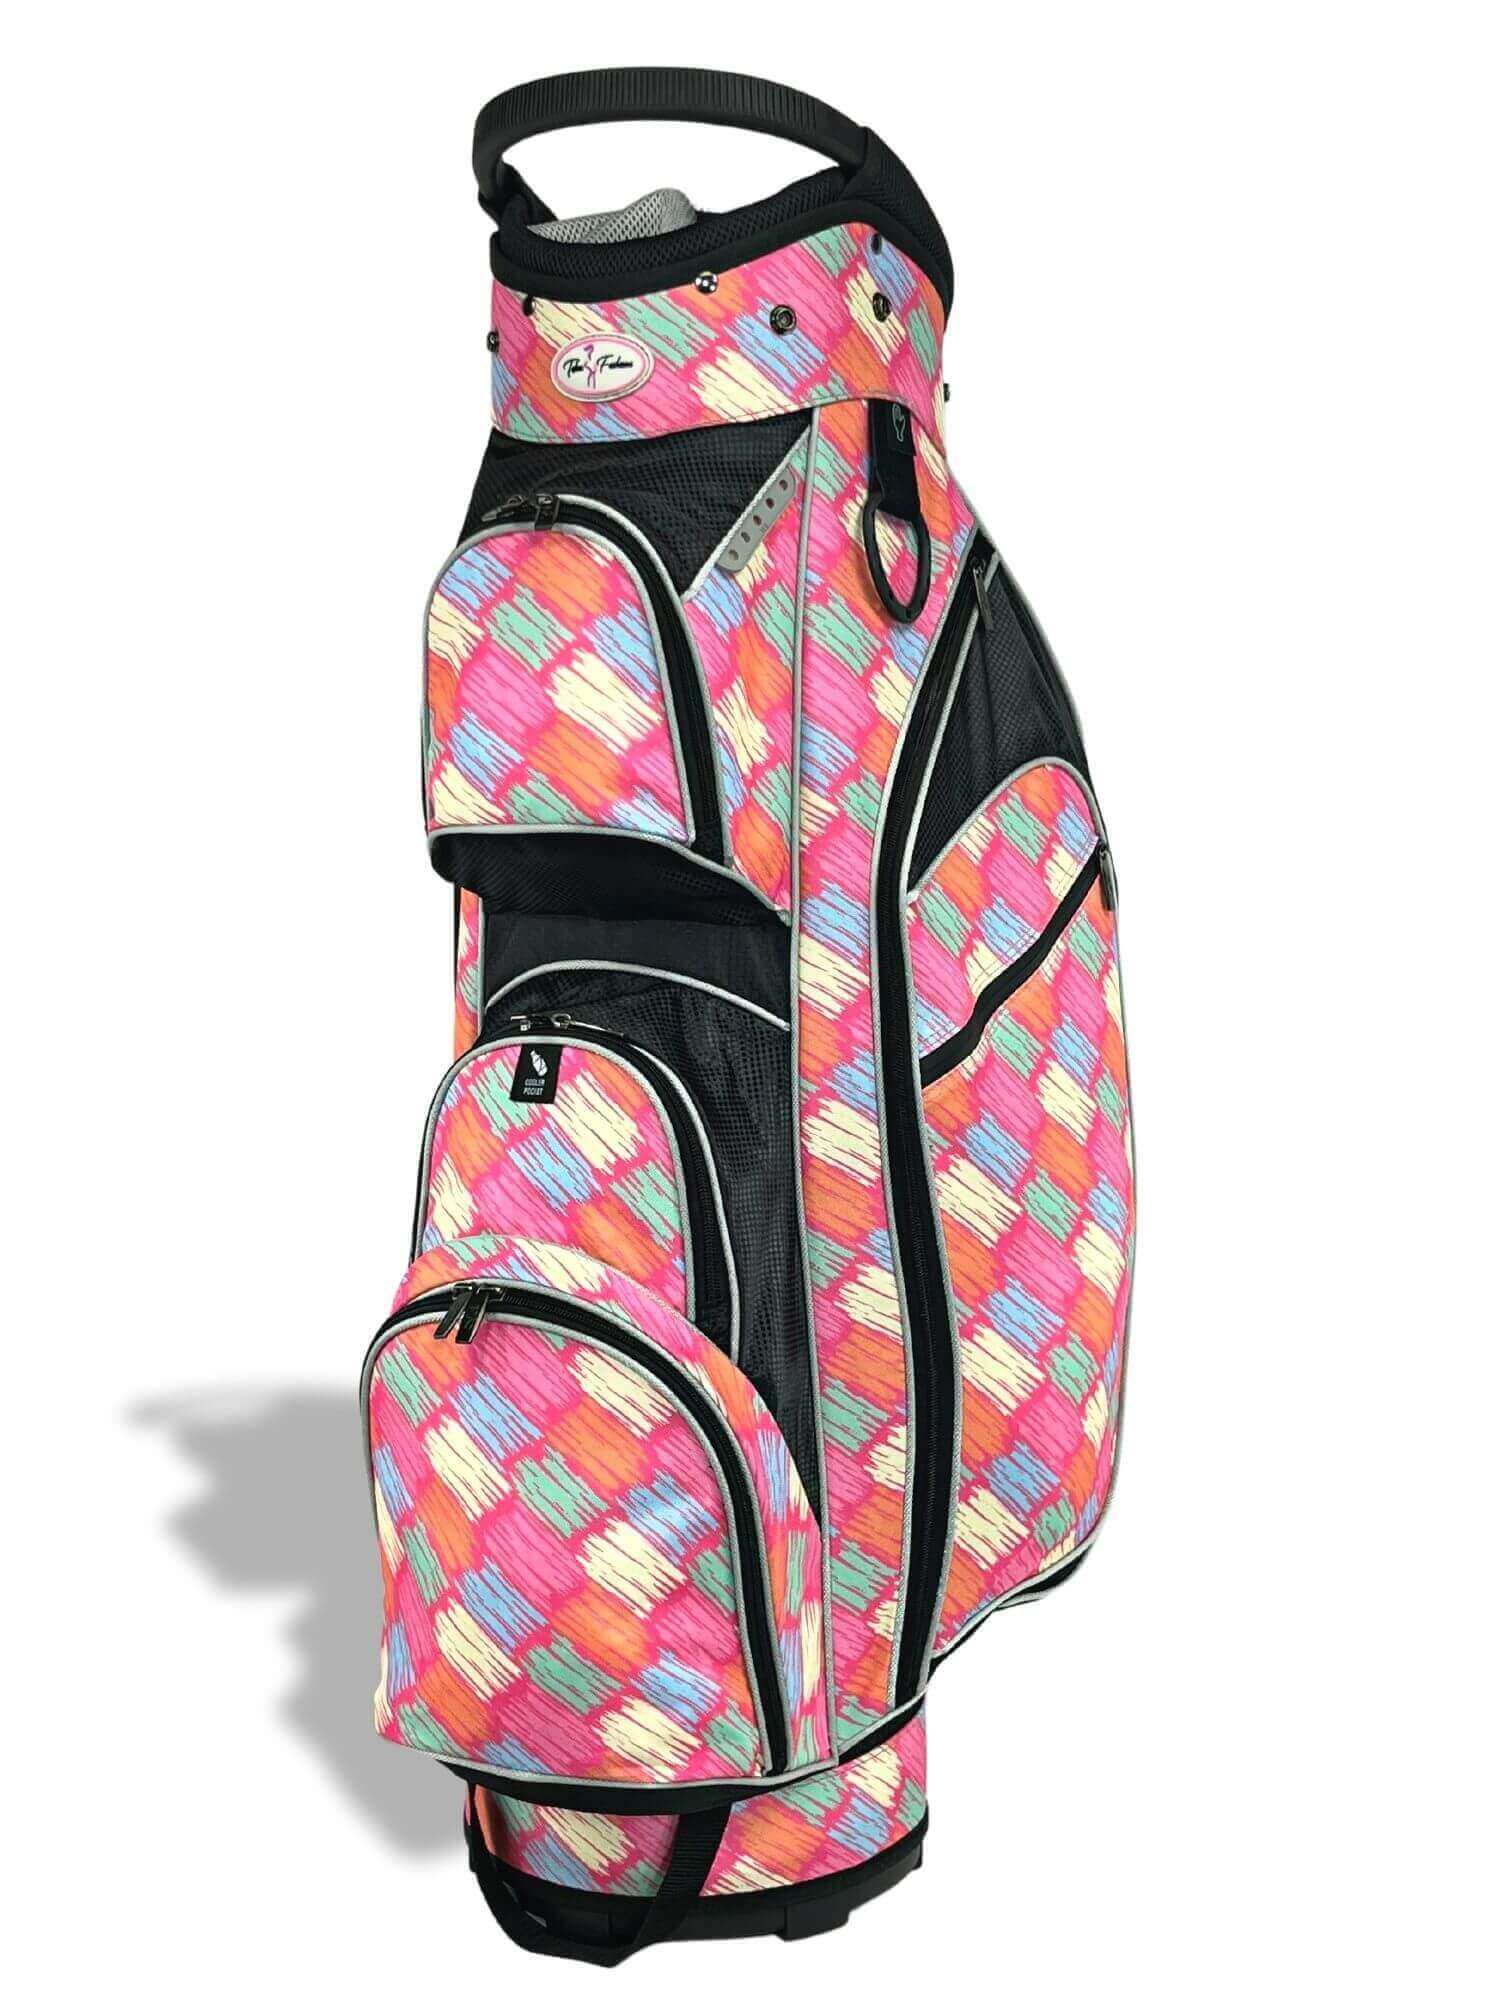 14 Way Designer Women's Golf Cart Bag with Cooler - Posh Pink